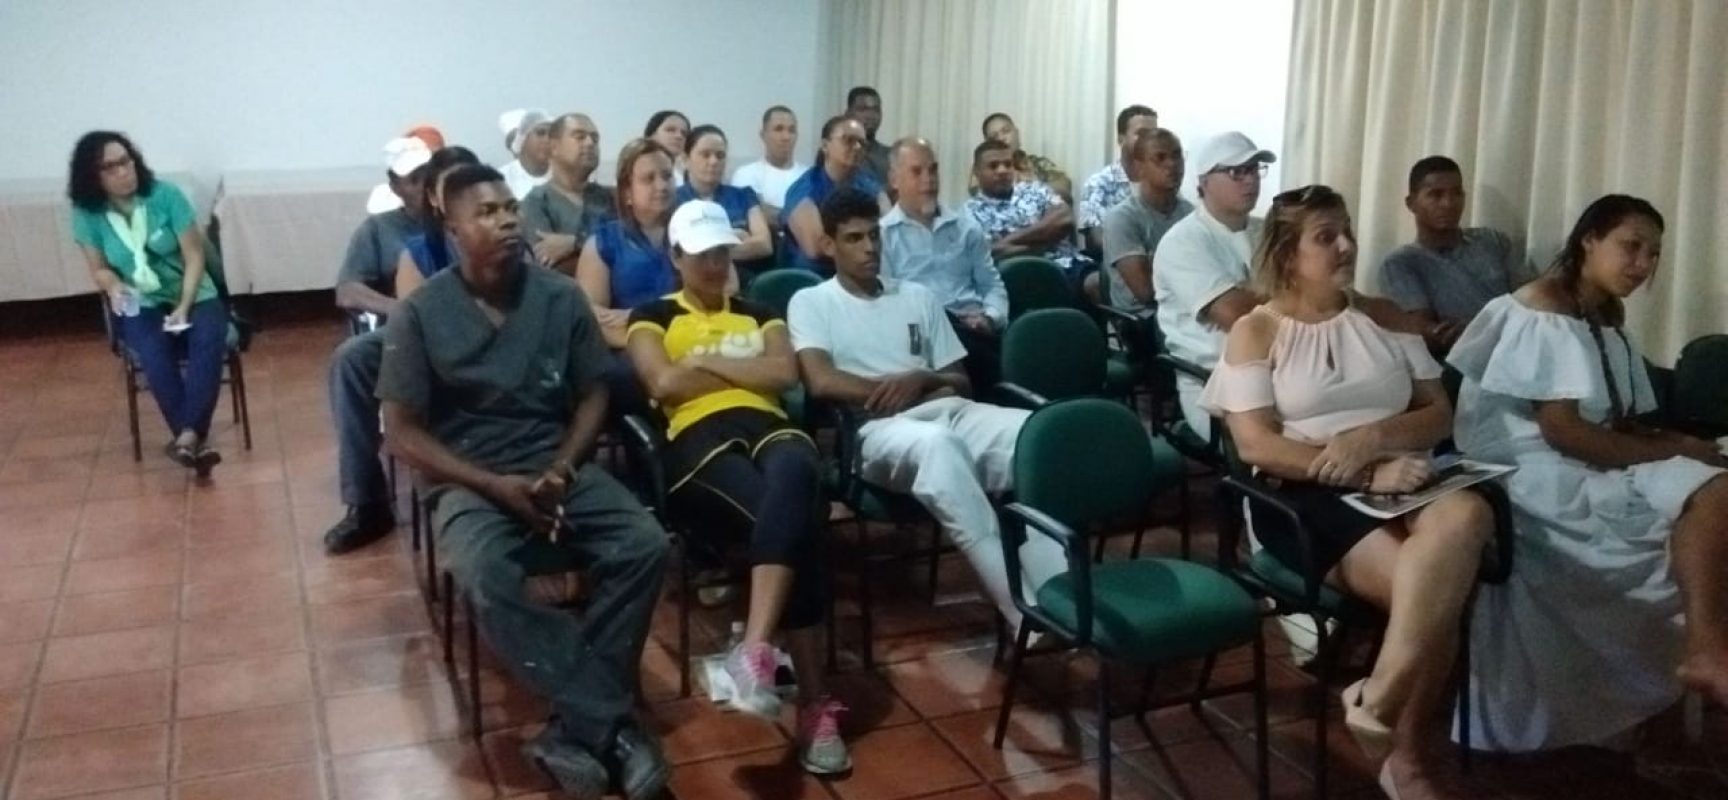 Instituto Nossa Ilhéus realiza palestra sobre cidadania para colaboradores do Hotel Jardim Atlântico